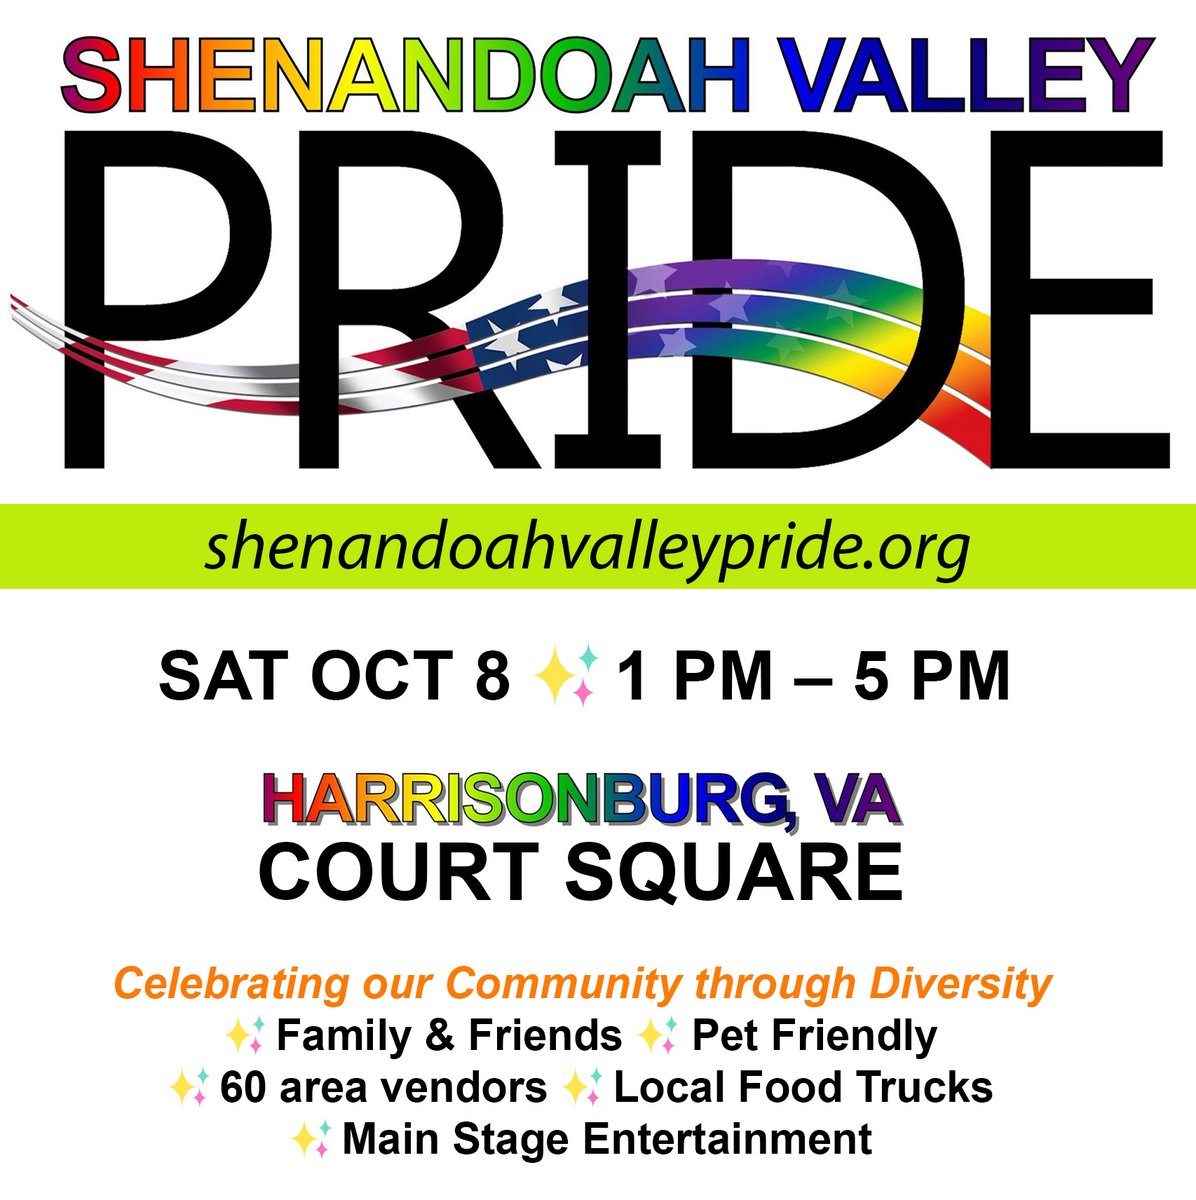 See you @VisitHburgVA Sat 10/8 for Shenandoah Valley Pride ~Celebrating community through diversity 😍 Families, pet friendly, 60 area vendors, local food trucks & main stage entertainment 🌈 facebook.com/events/5963059… ✨ @ILoveLGBTPride #shenandoahvalleypride #pride2022 #visitgayva